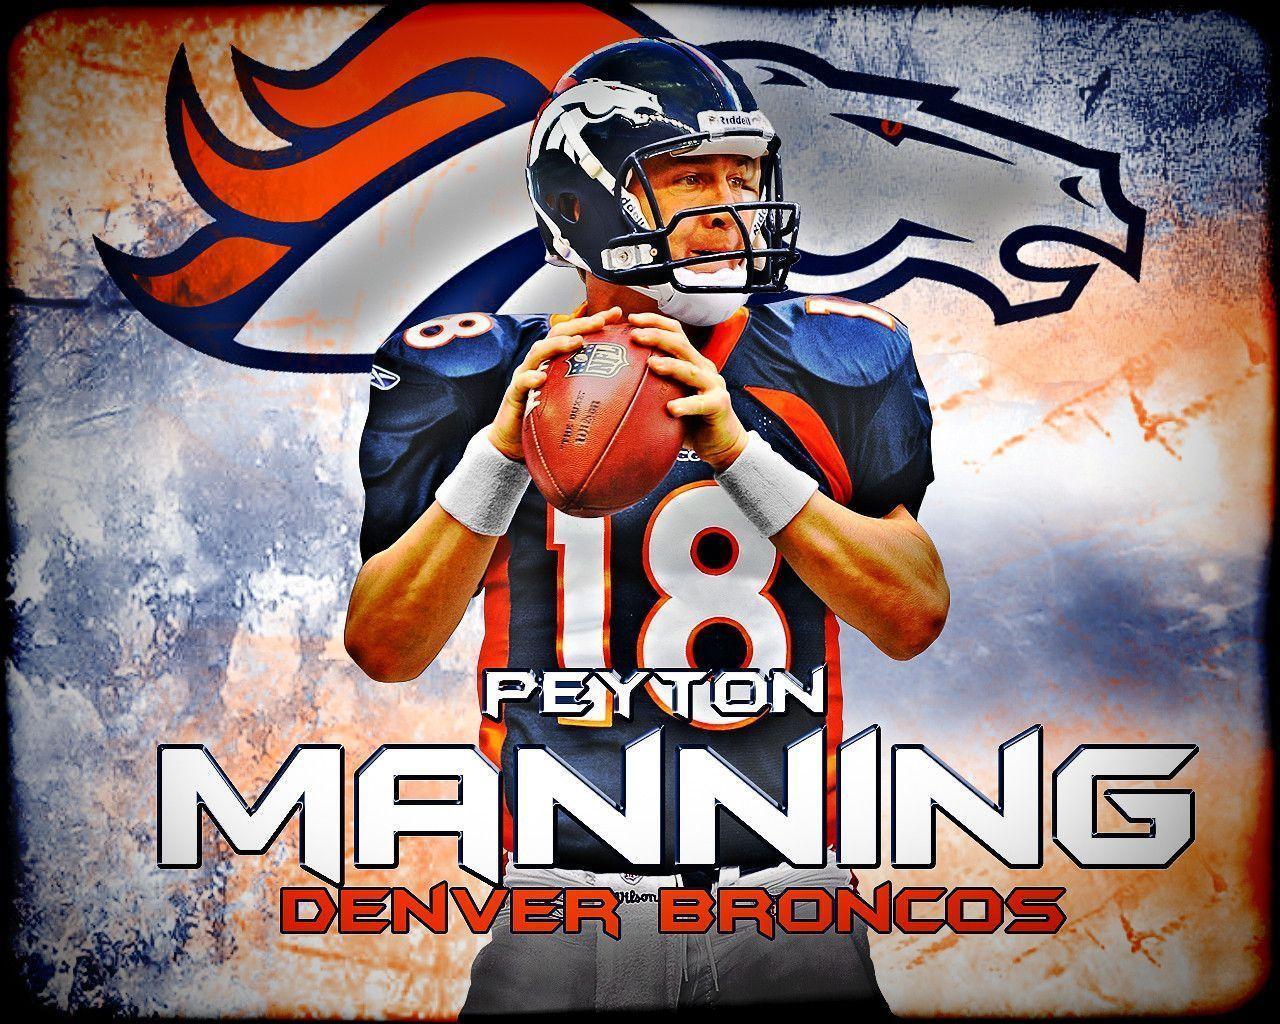 Denver Broncos Wallpaper 2013 Image & Picture